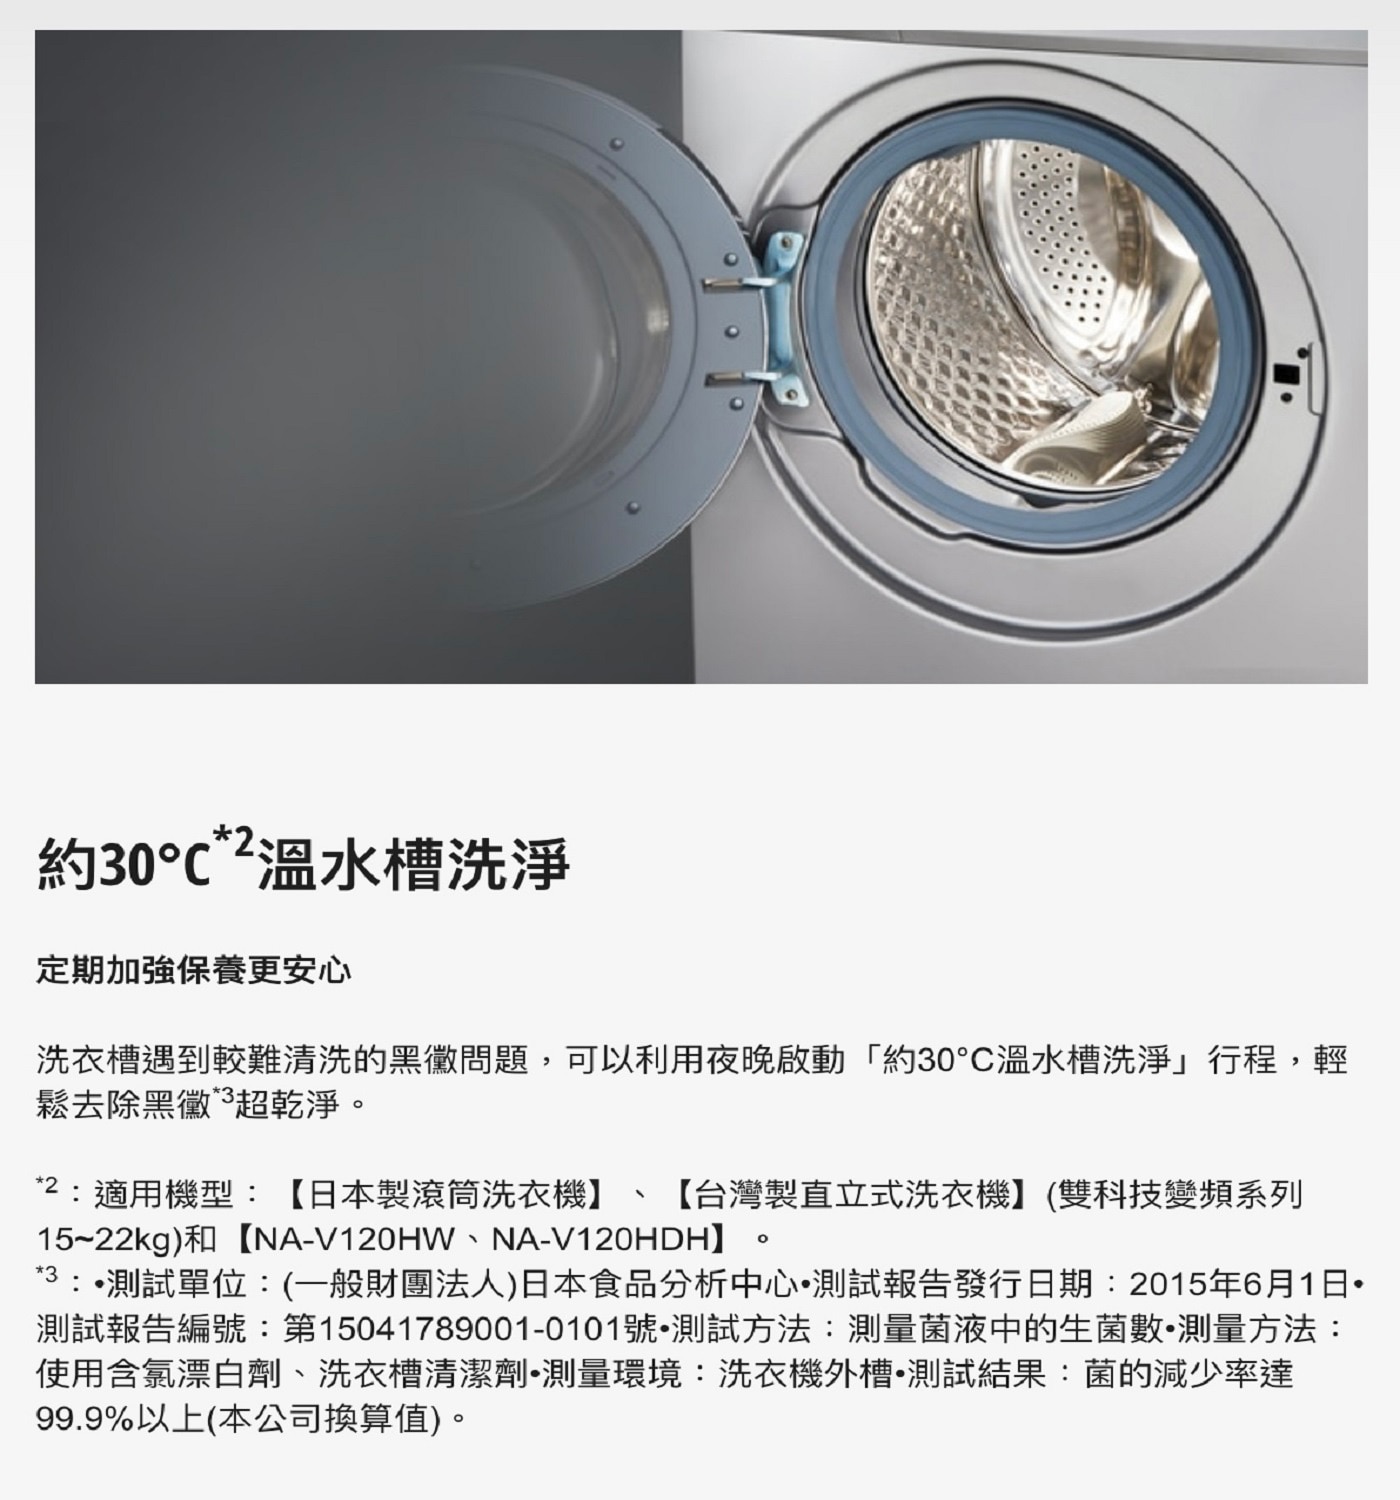 Panasonic 國際牌變頻12公斤洗脫滾筒洗衣機NA-V120HW，5段溫水洗衣行程，40度C泡洗淨，30度C溫水槽洗淨，不鏽鋼鋼槽，16種洗衣行程。